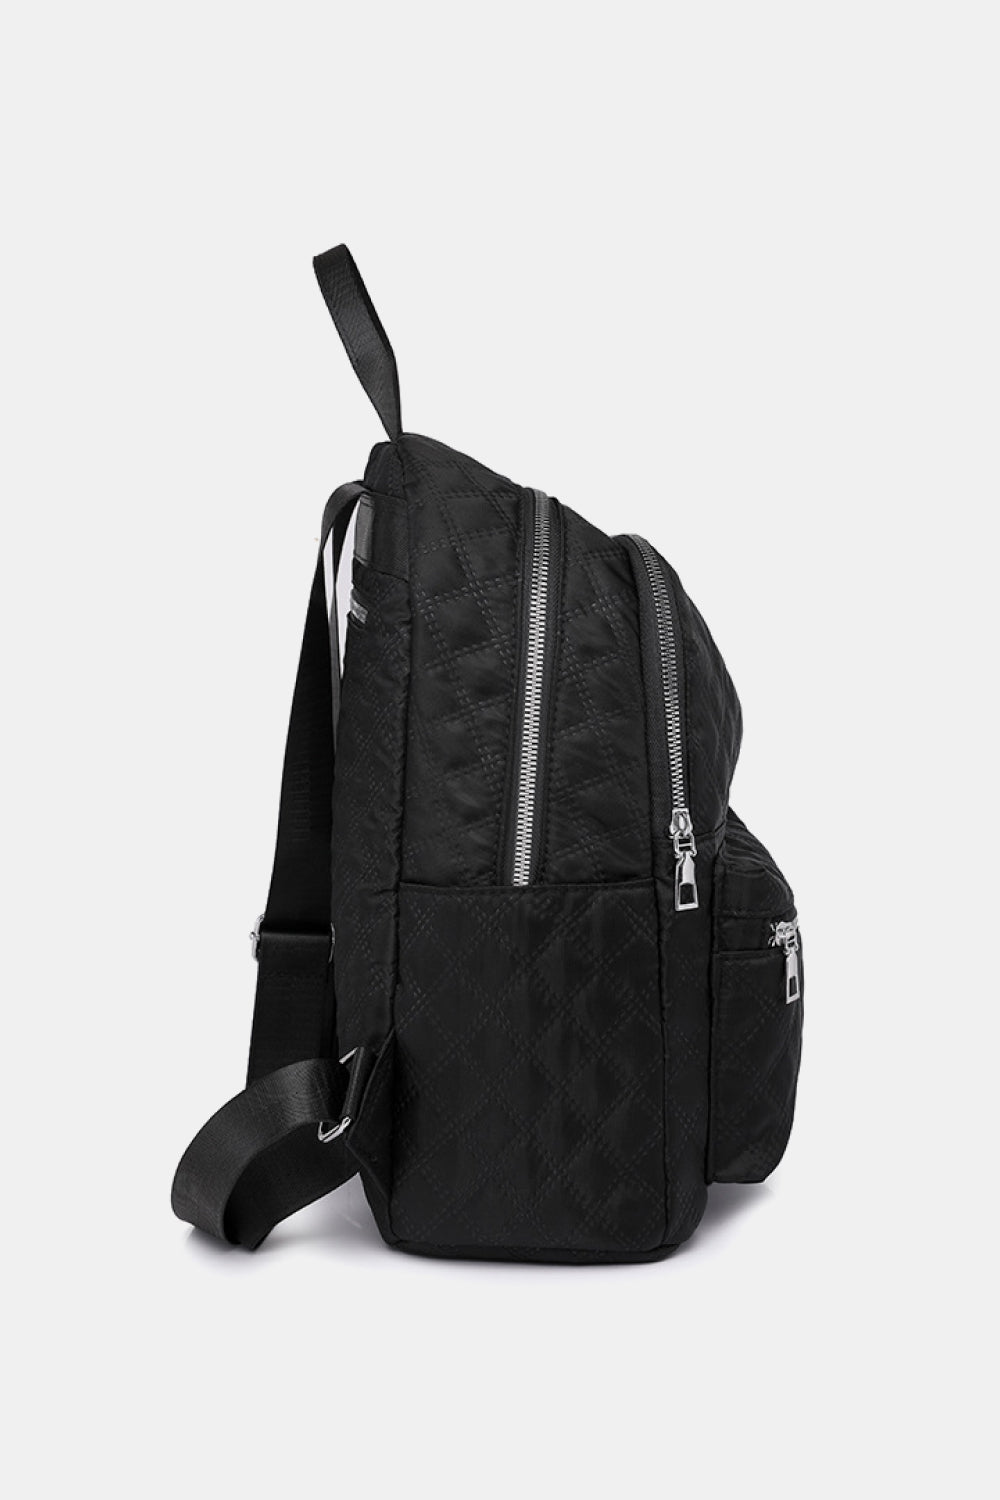 White Smoke Barbie Dreams Medium Polyester Backpack Handbags